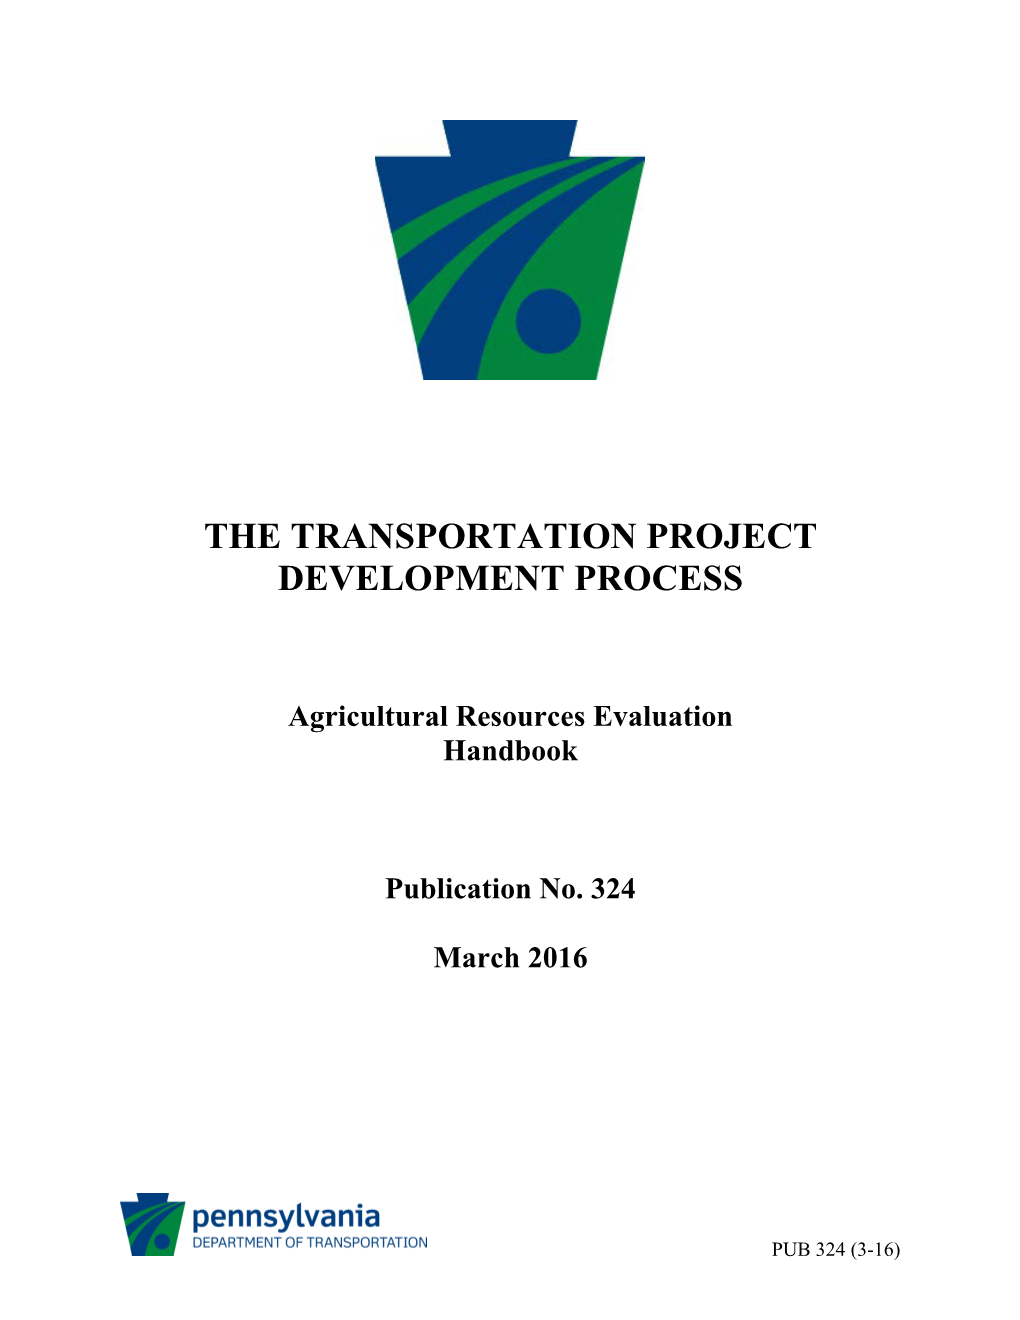 Pub. 324 Agricultural Resources Evaluation Handbook